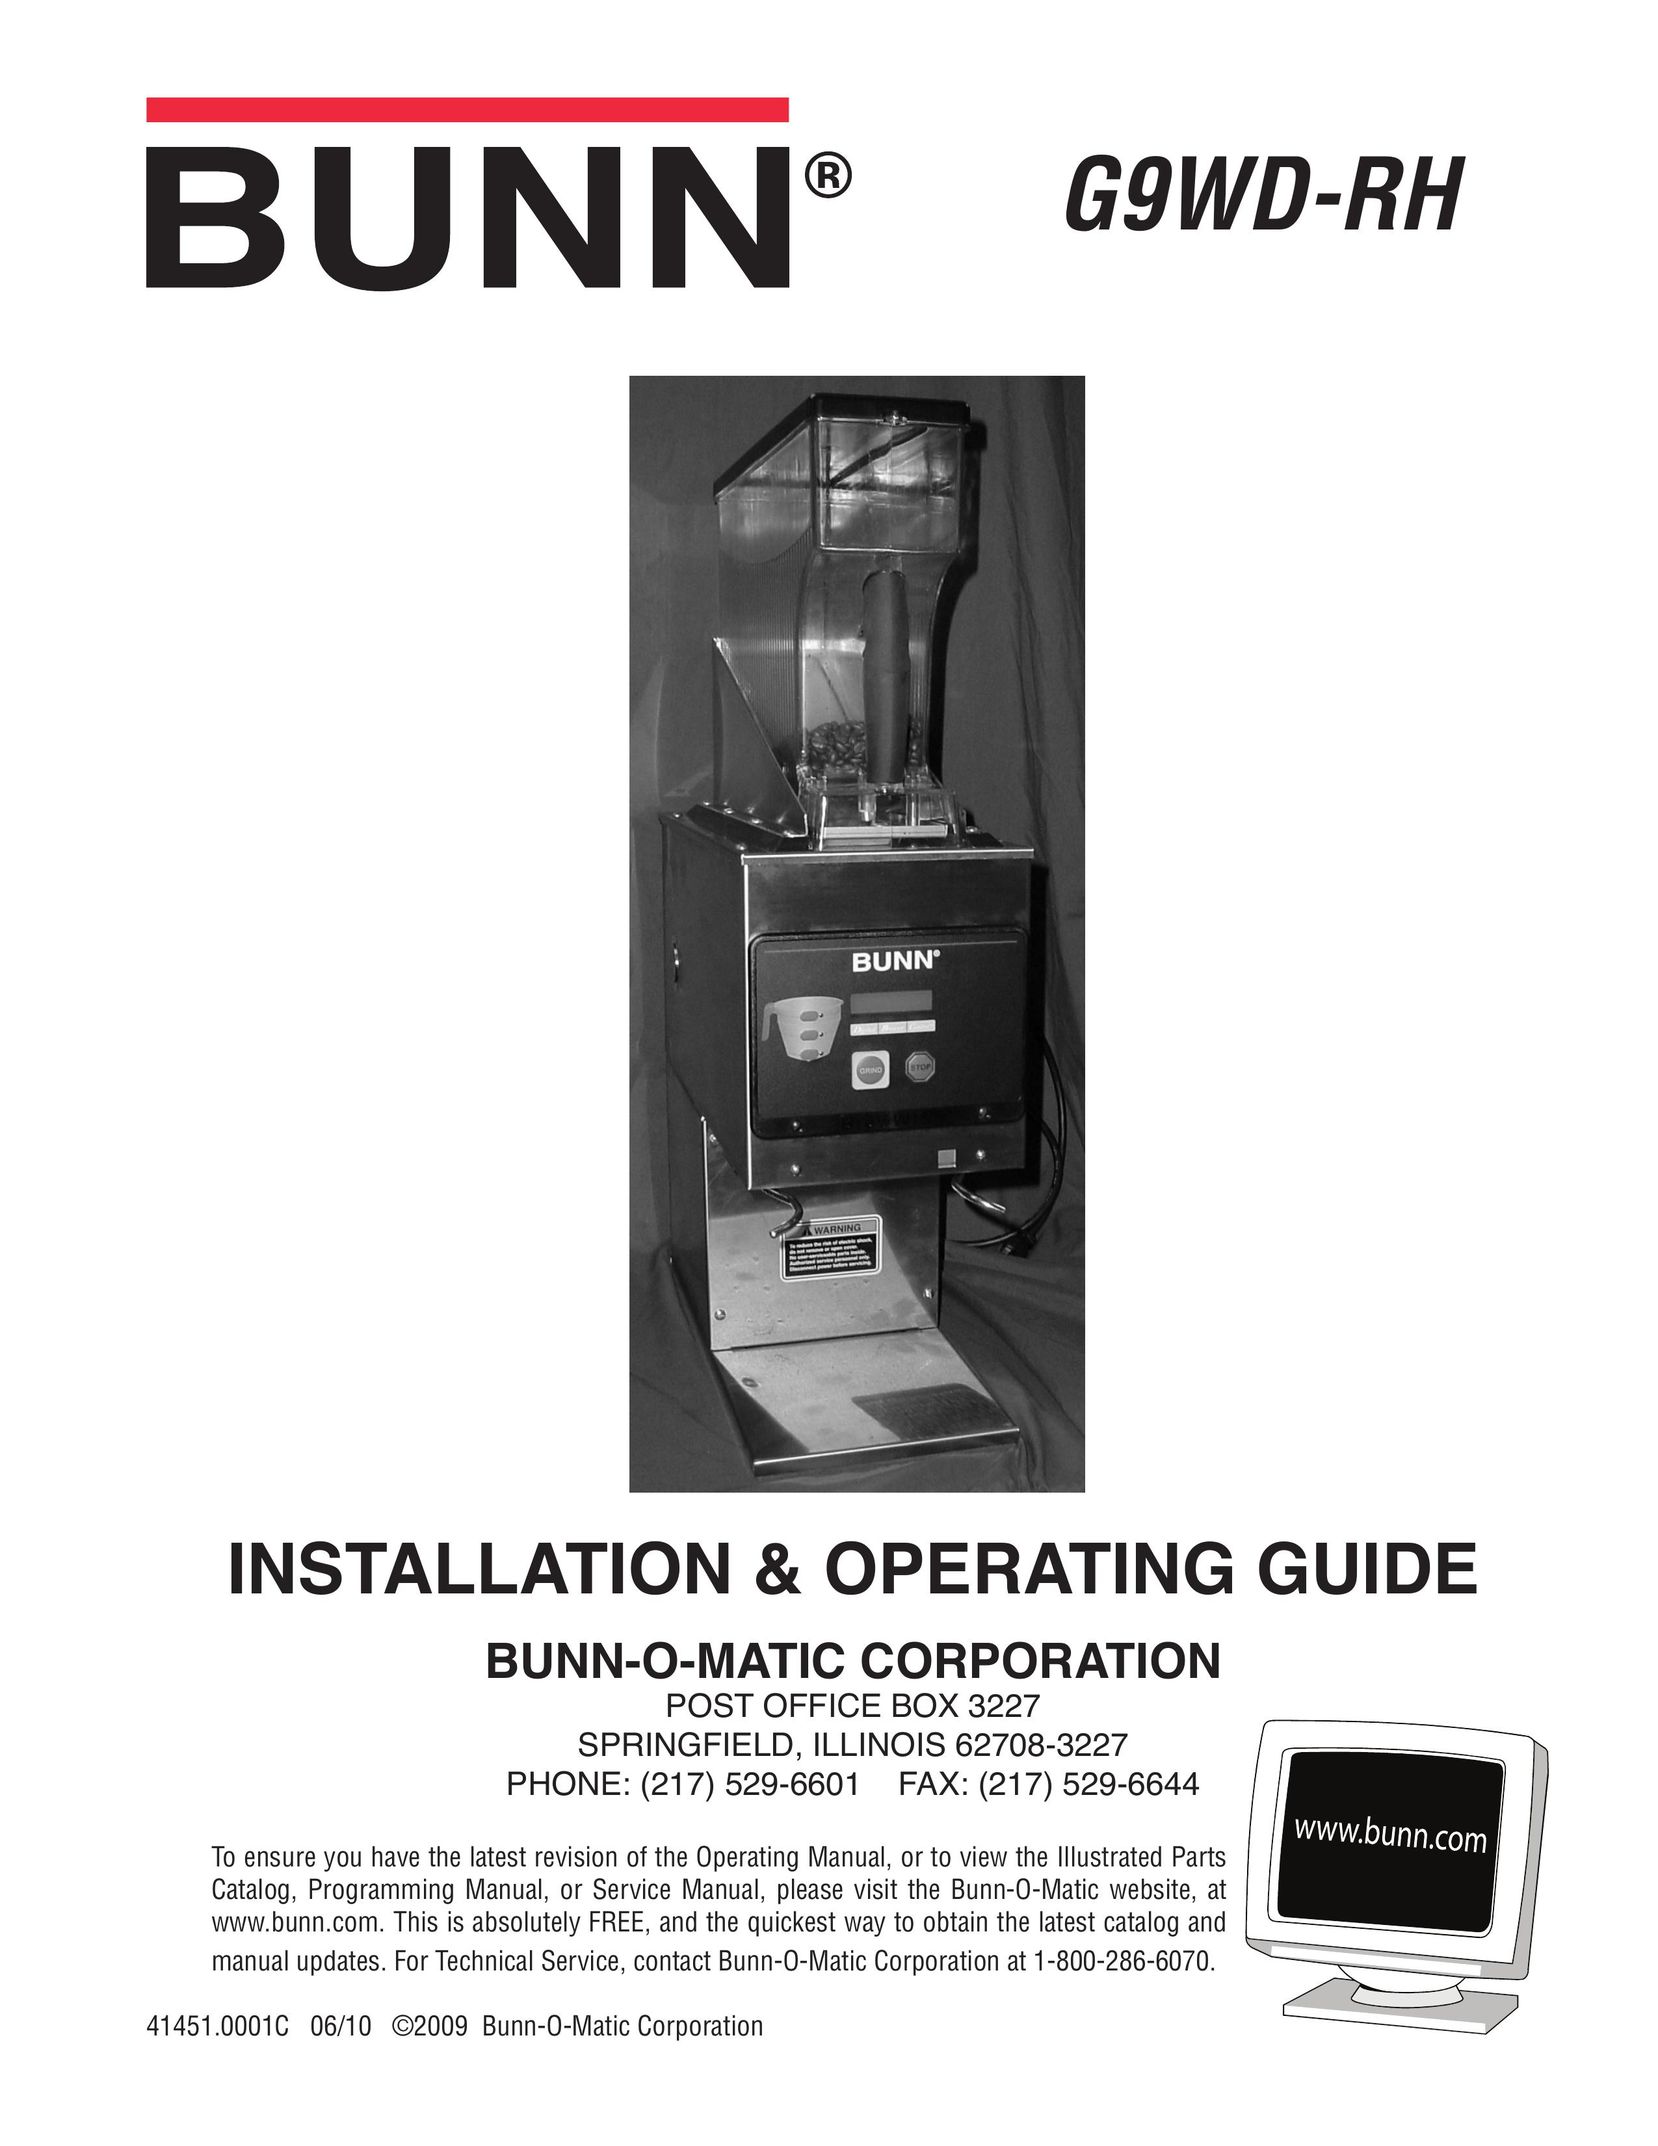 Bunn G9WD-RH Coffee Grinder User Manual